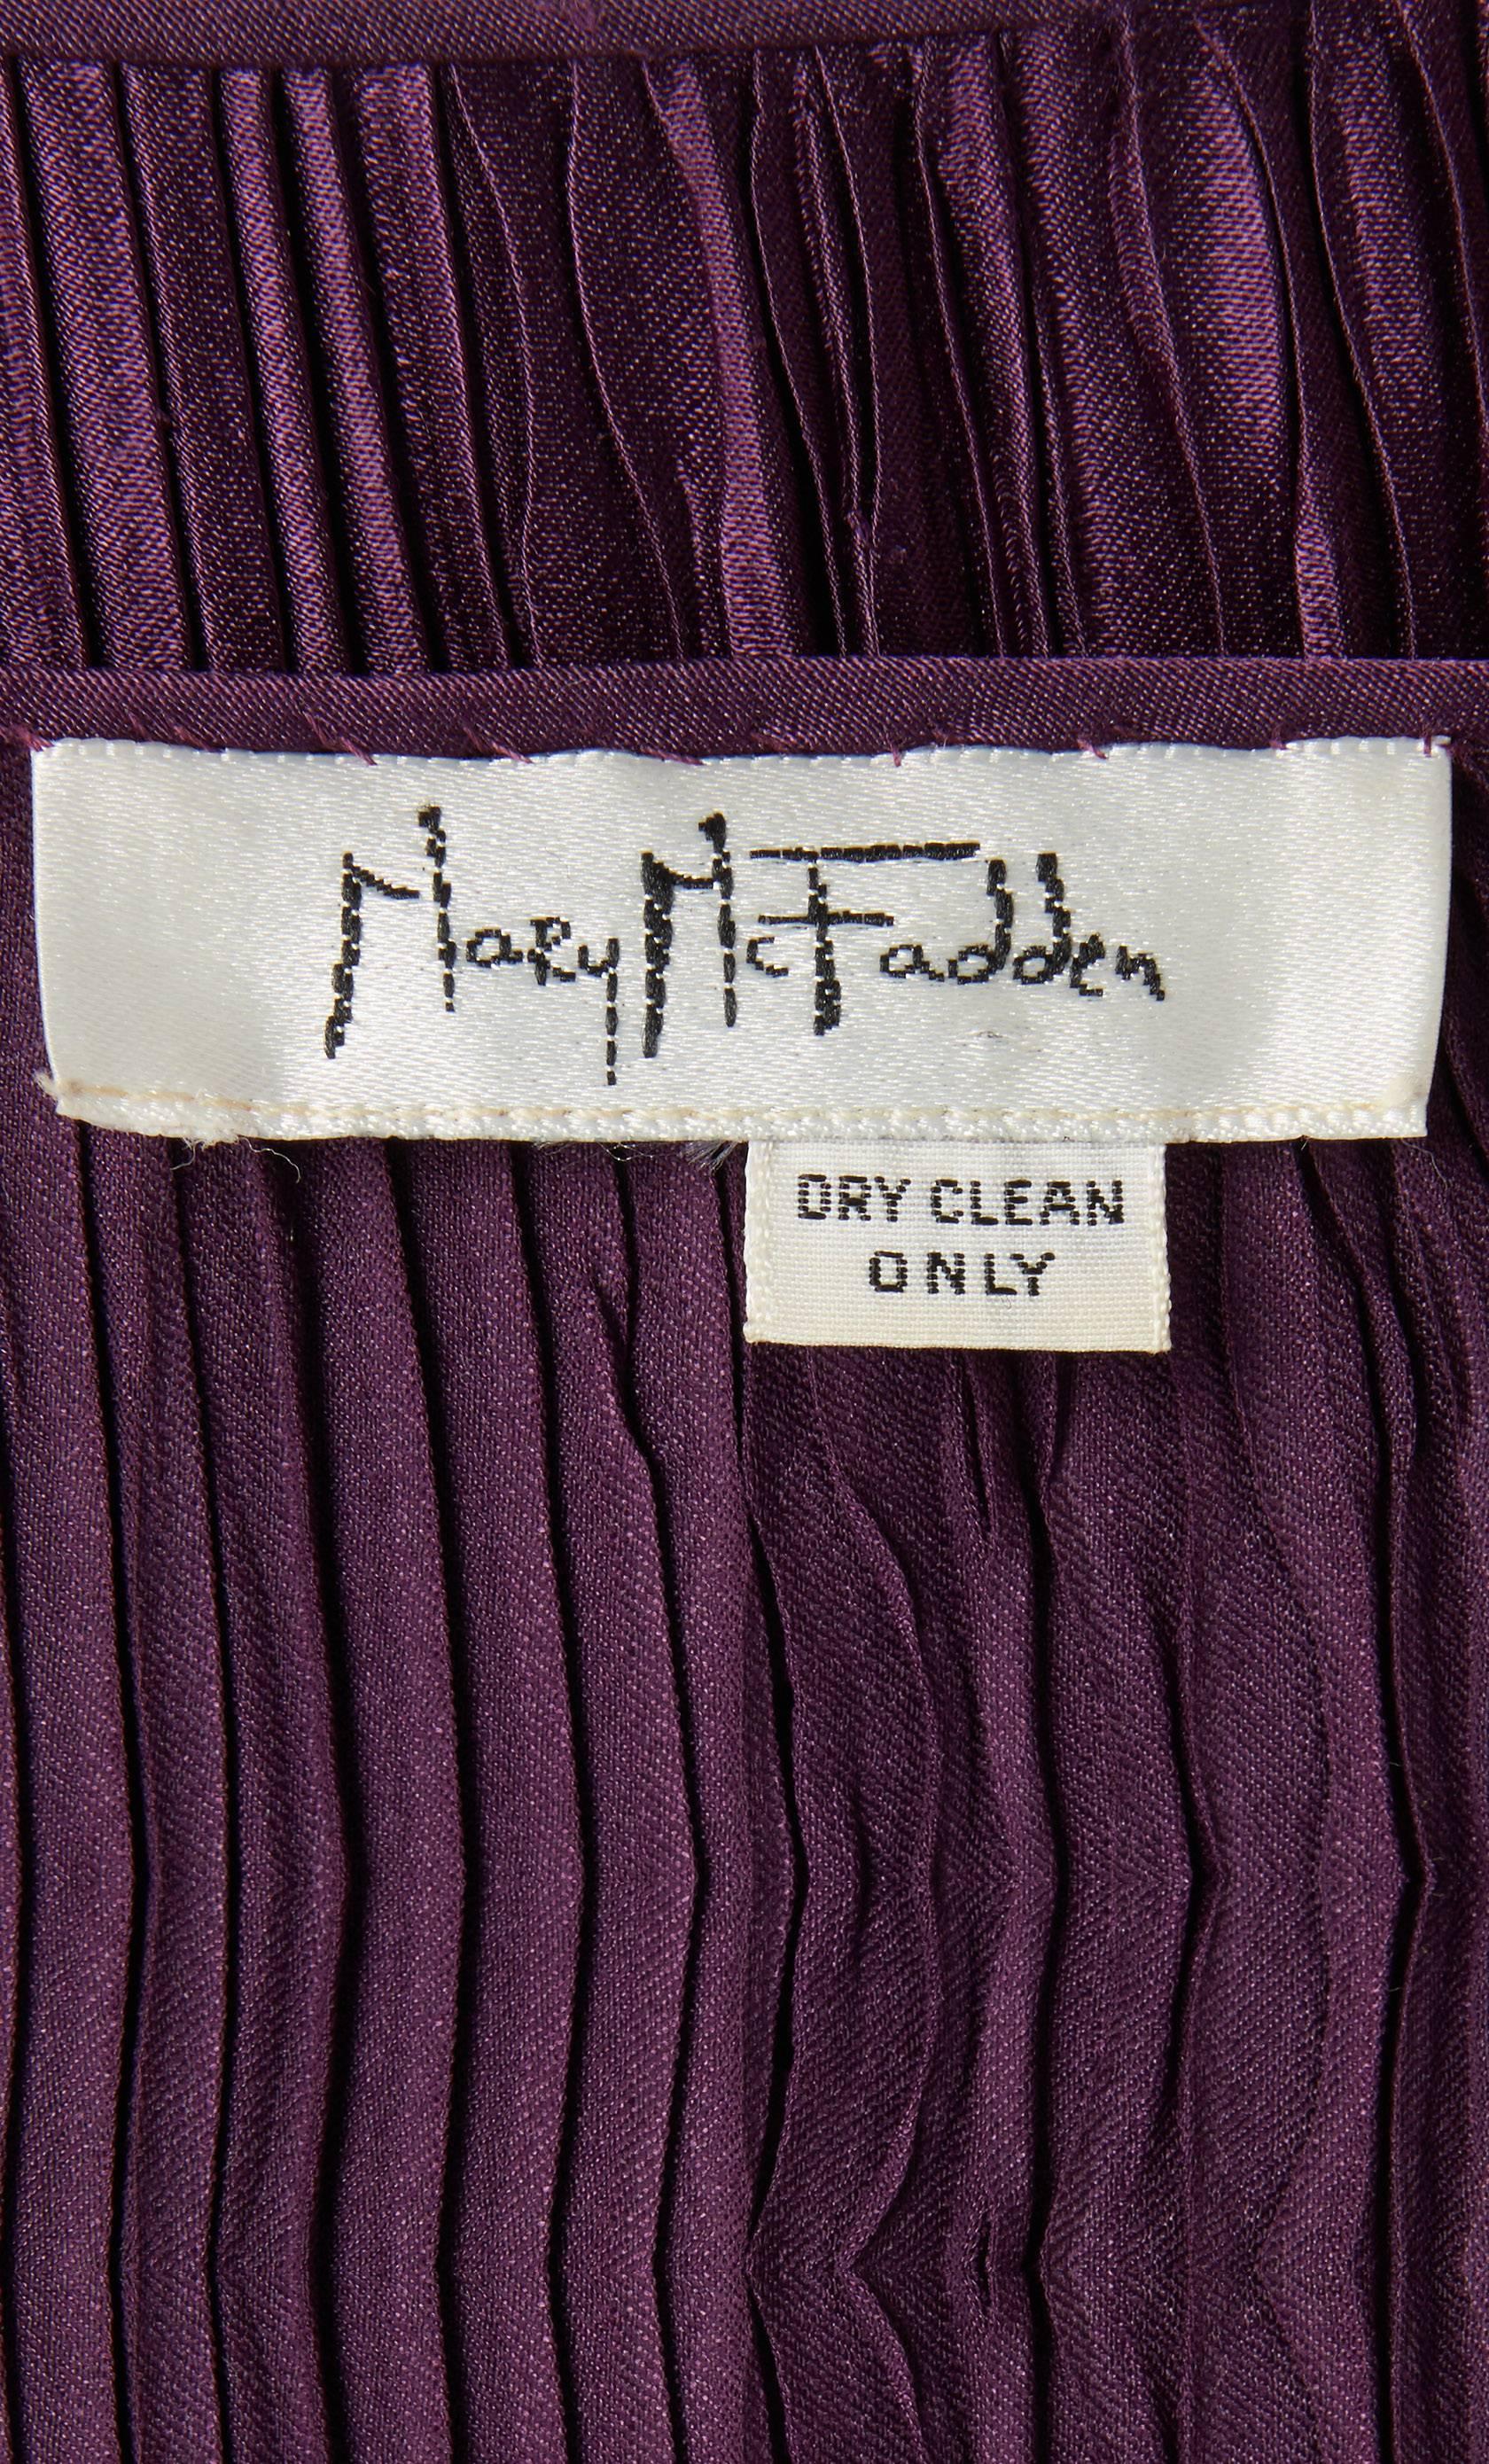 Women's Mary McFadden purple dress, circa 1978